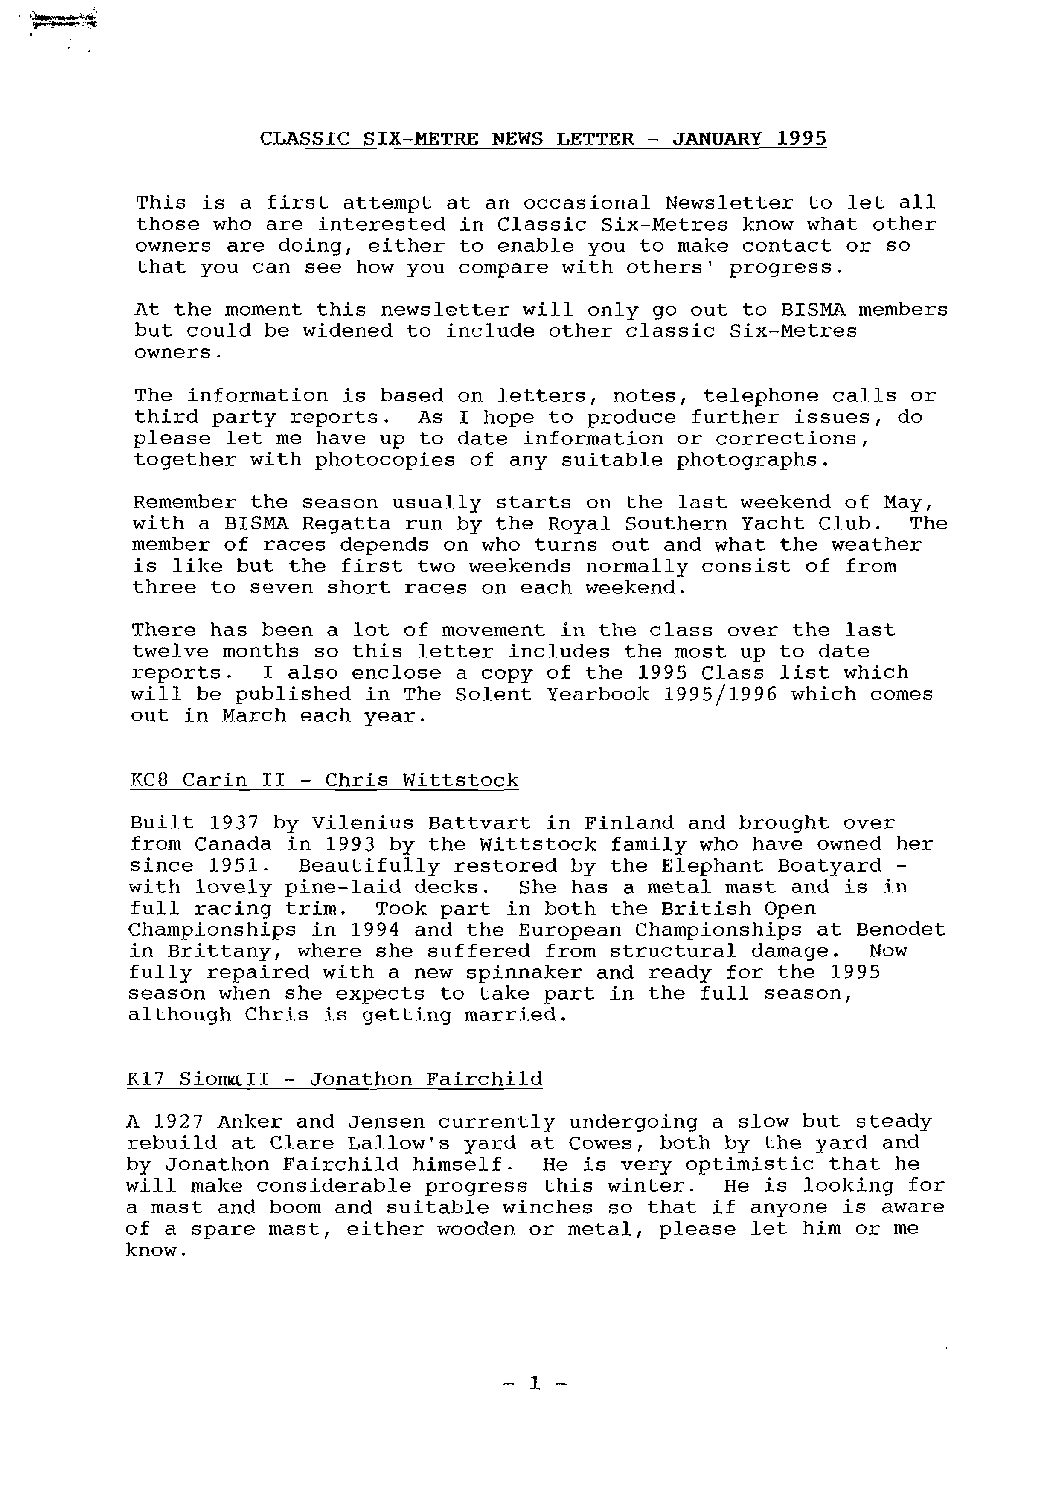 Six Metre Newsletter 1995